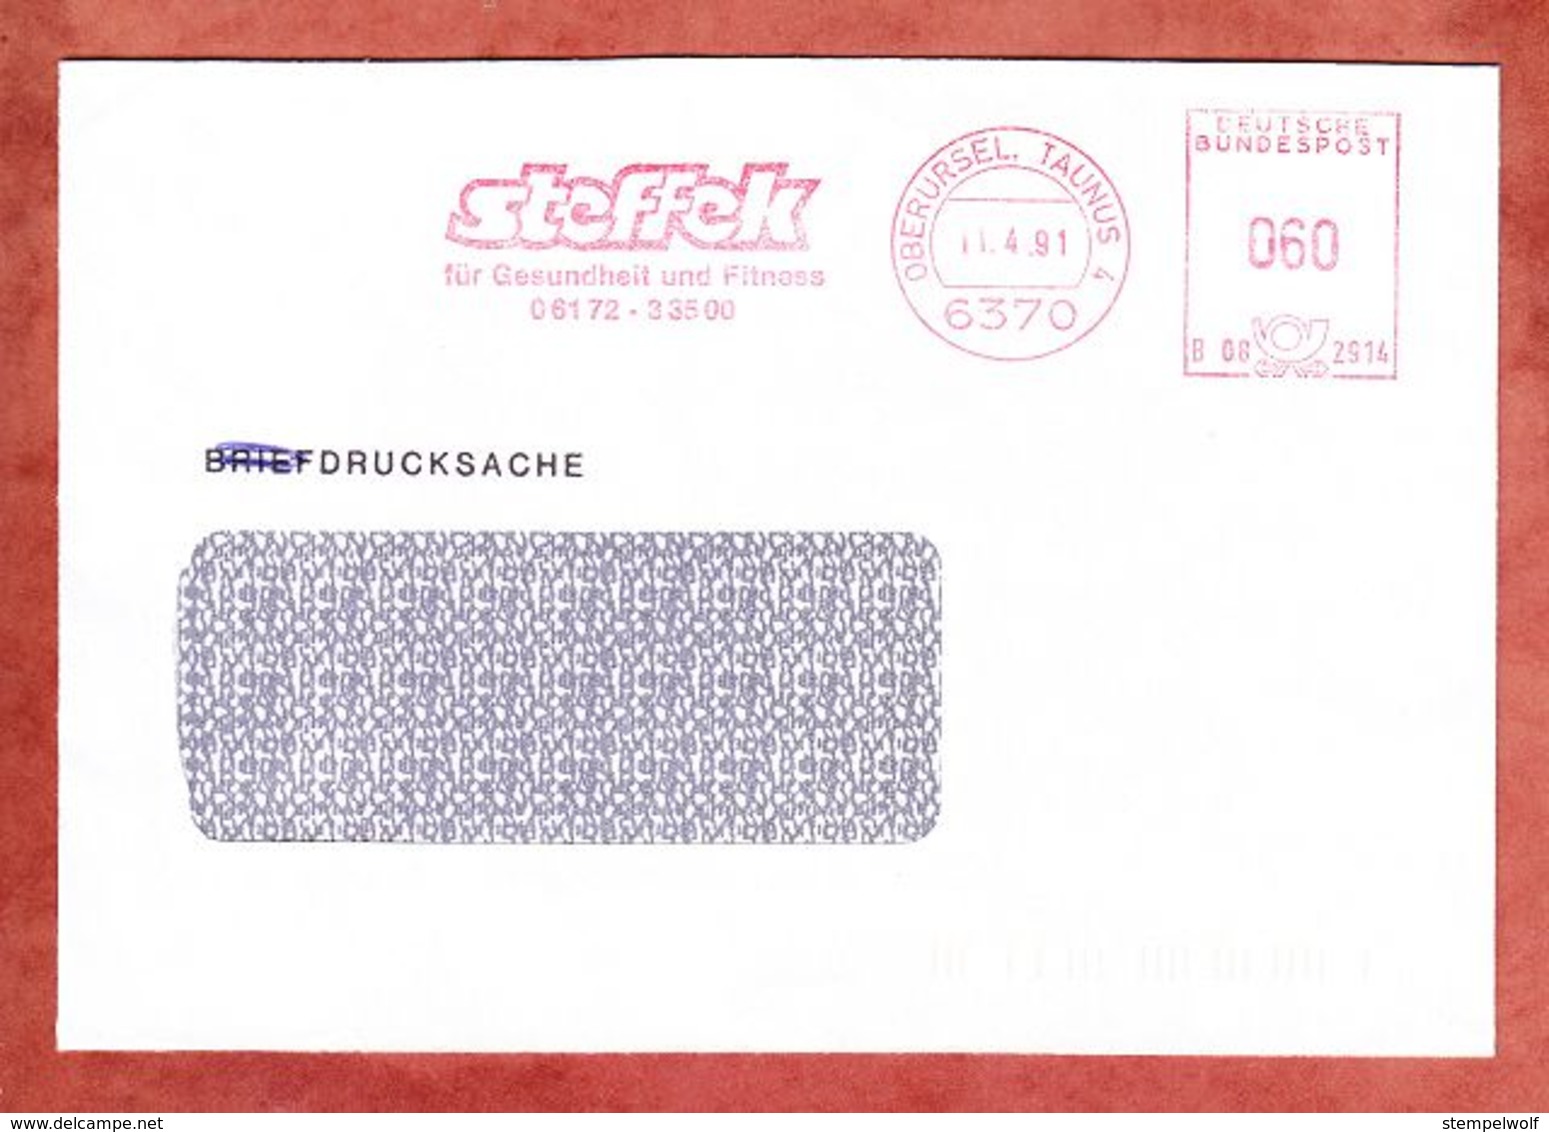 Drucksache, Francotyp-Postalia B08-2914, Steffek, 60 Pfg, Oberursel 1991 (53255) - Maschinenstempel (EMA)